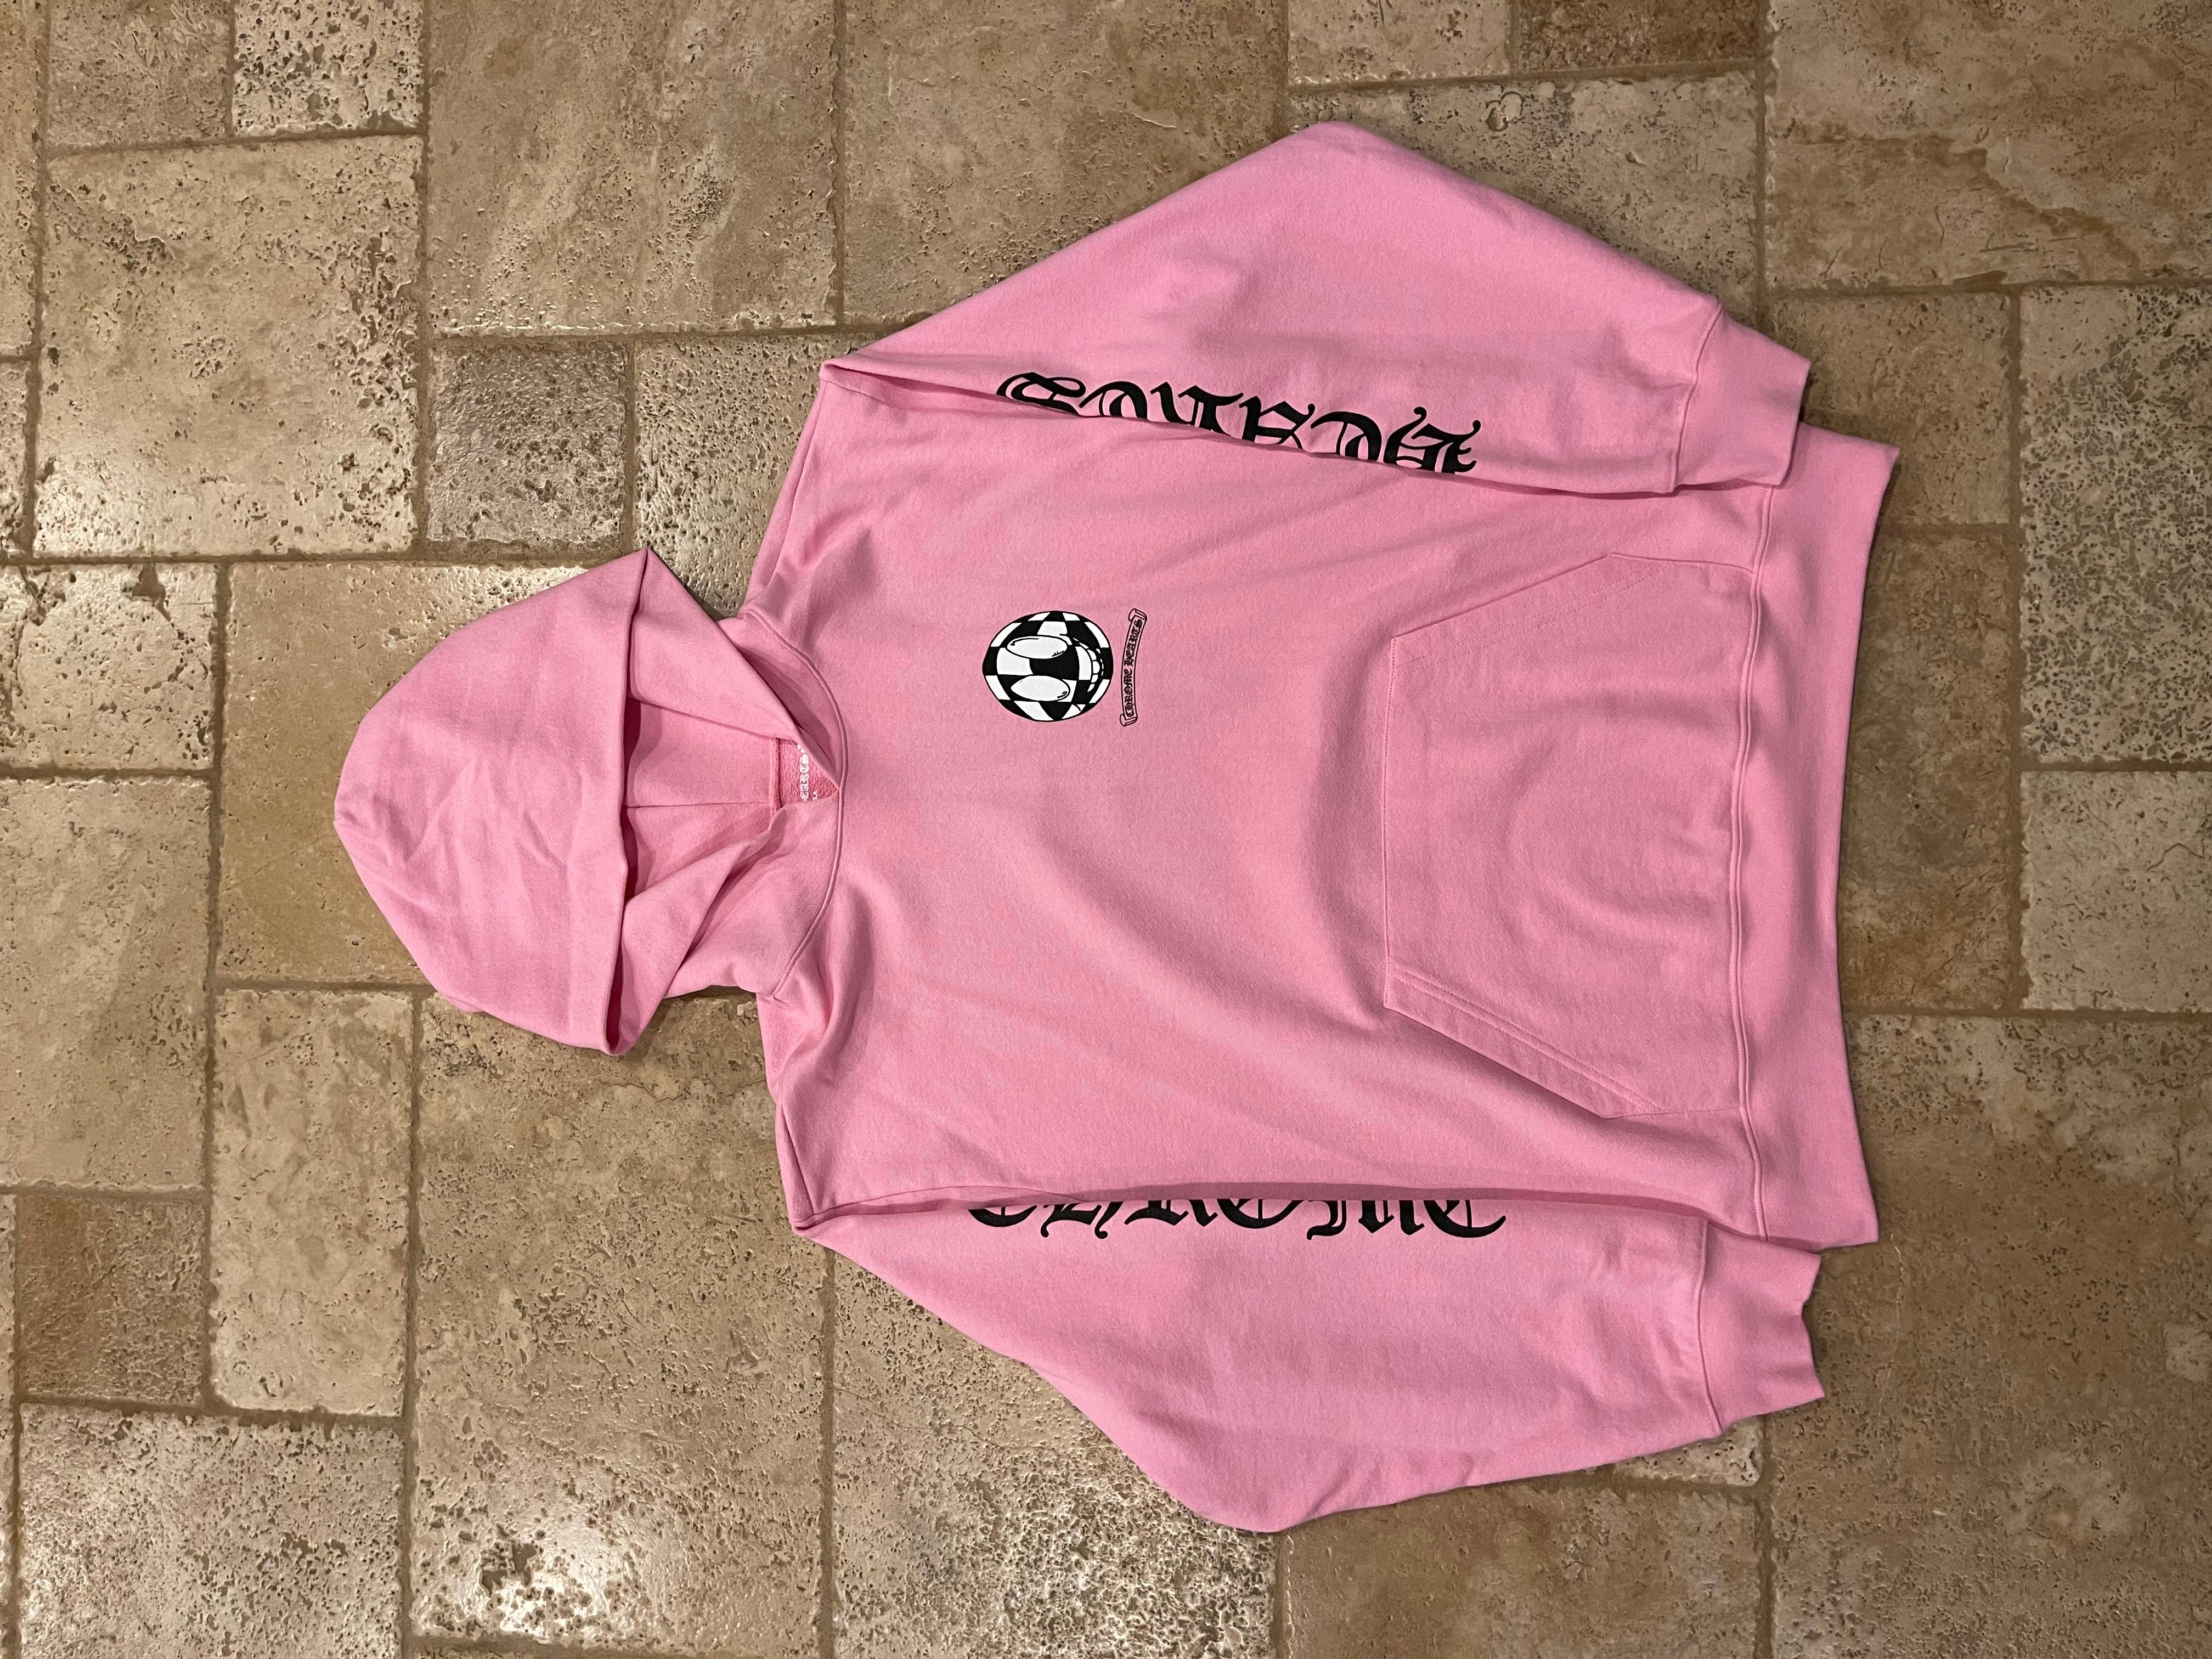 pink chrome hearts hoodie